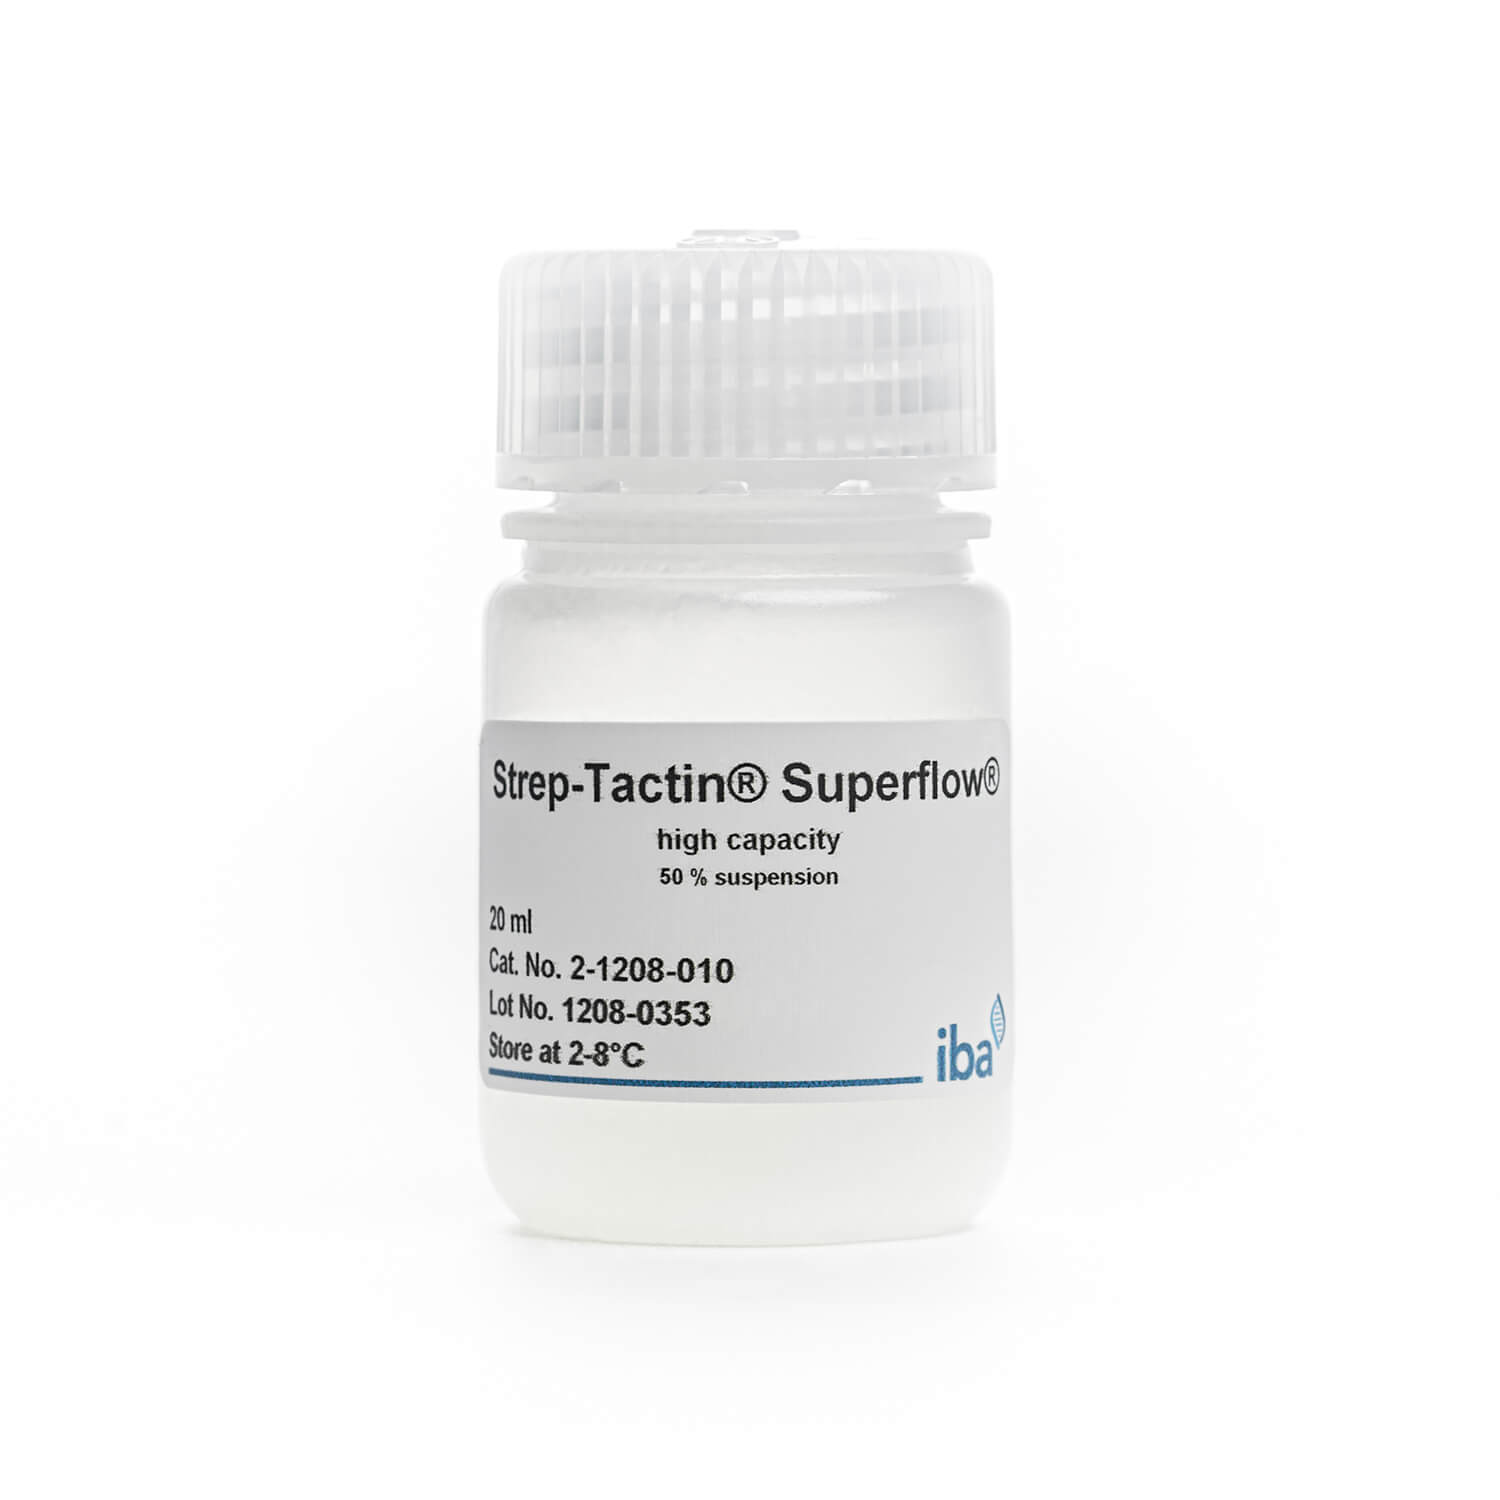 Strep-Tactin® Superflow® high capacity resin